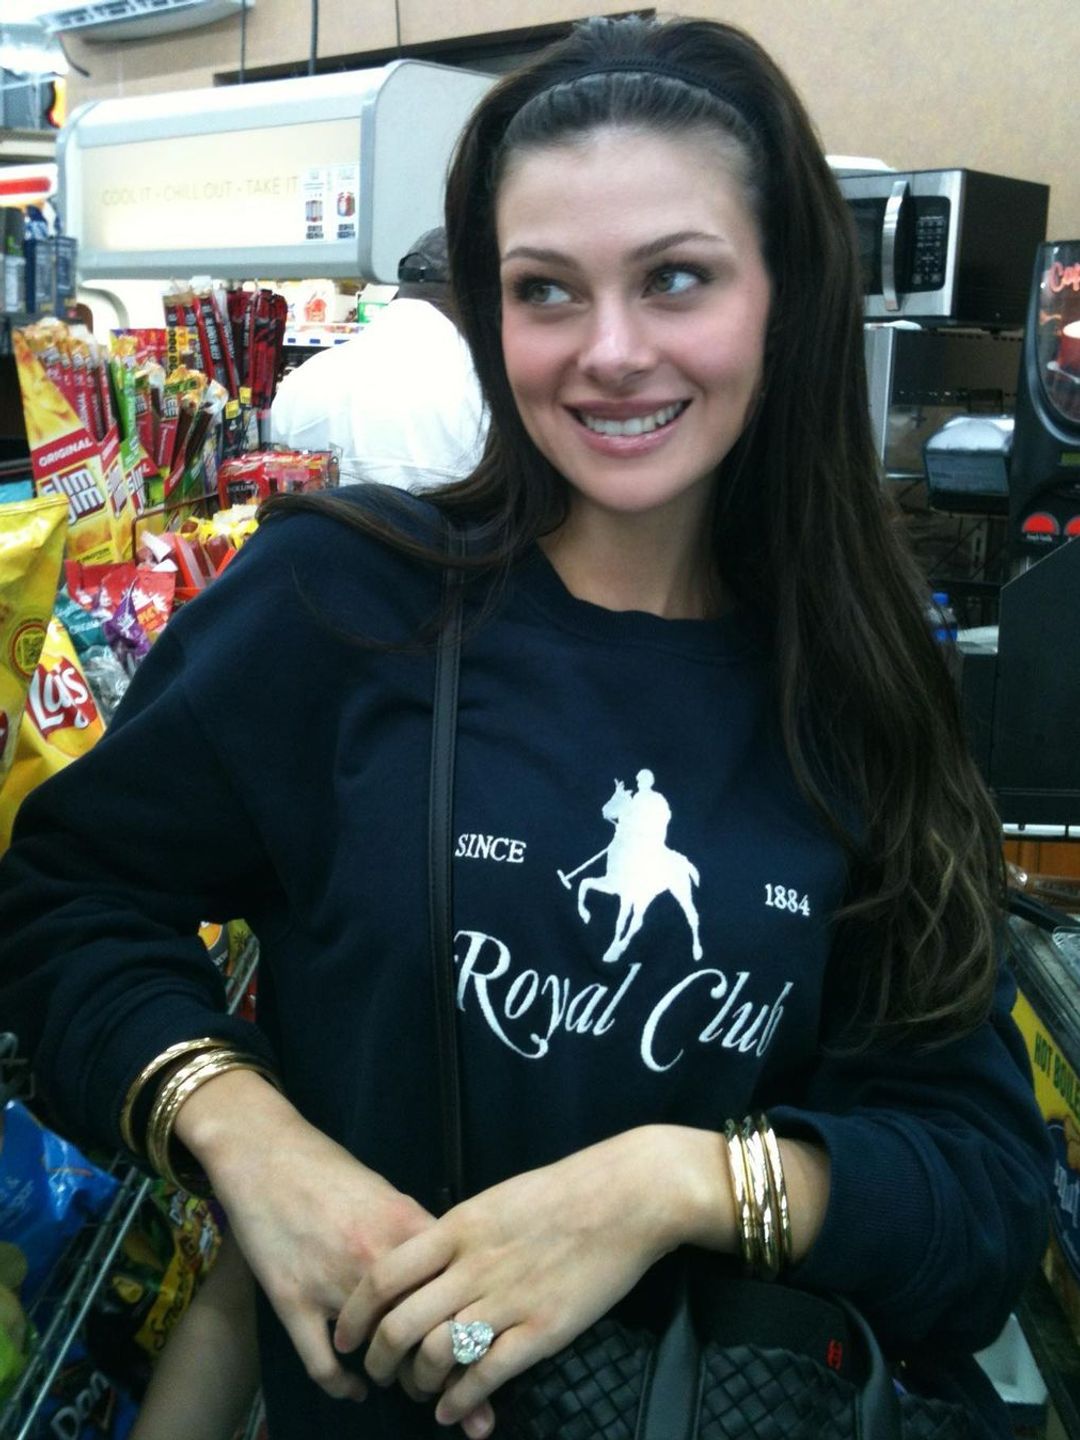 Nicola Peltz wears royal club polo sweatshirt